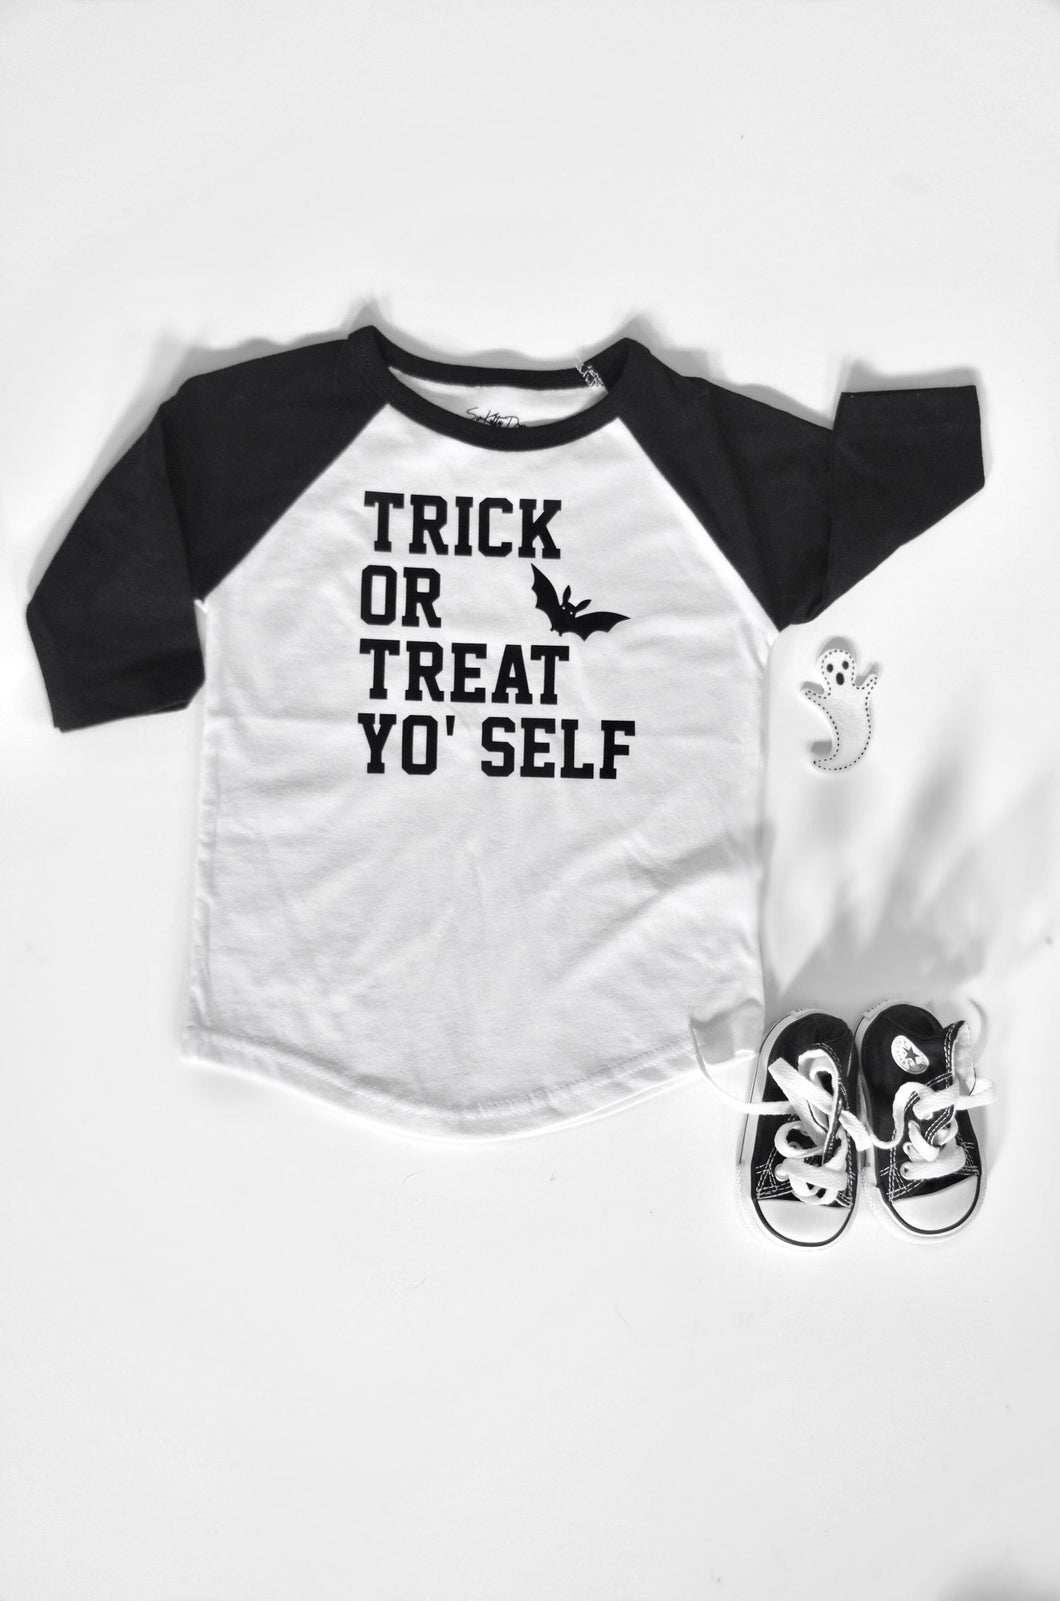 Trick or treat youself / Halloween Shirt / Kids Shirt / Trick or Treat T-Shirt / Toddler Halloween / Gift / Hip Hop / baseball shirt